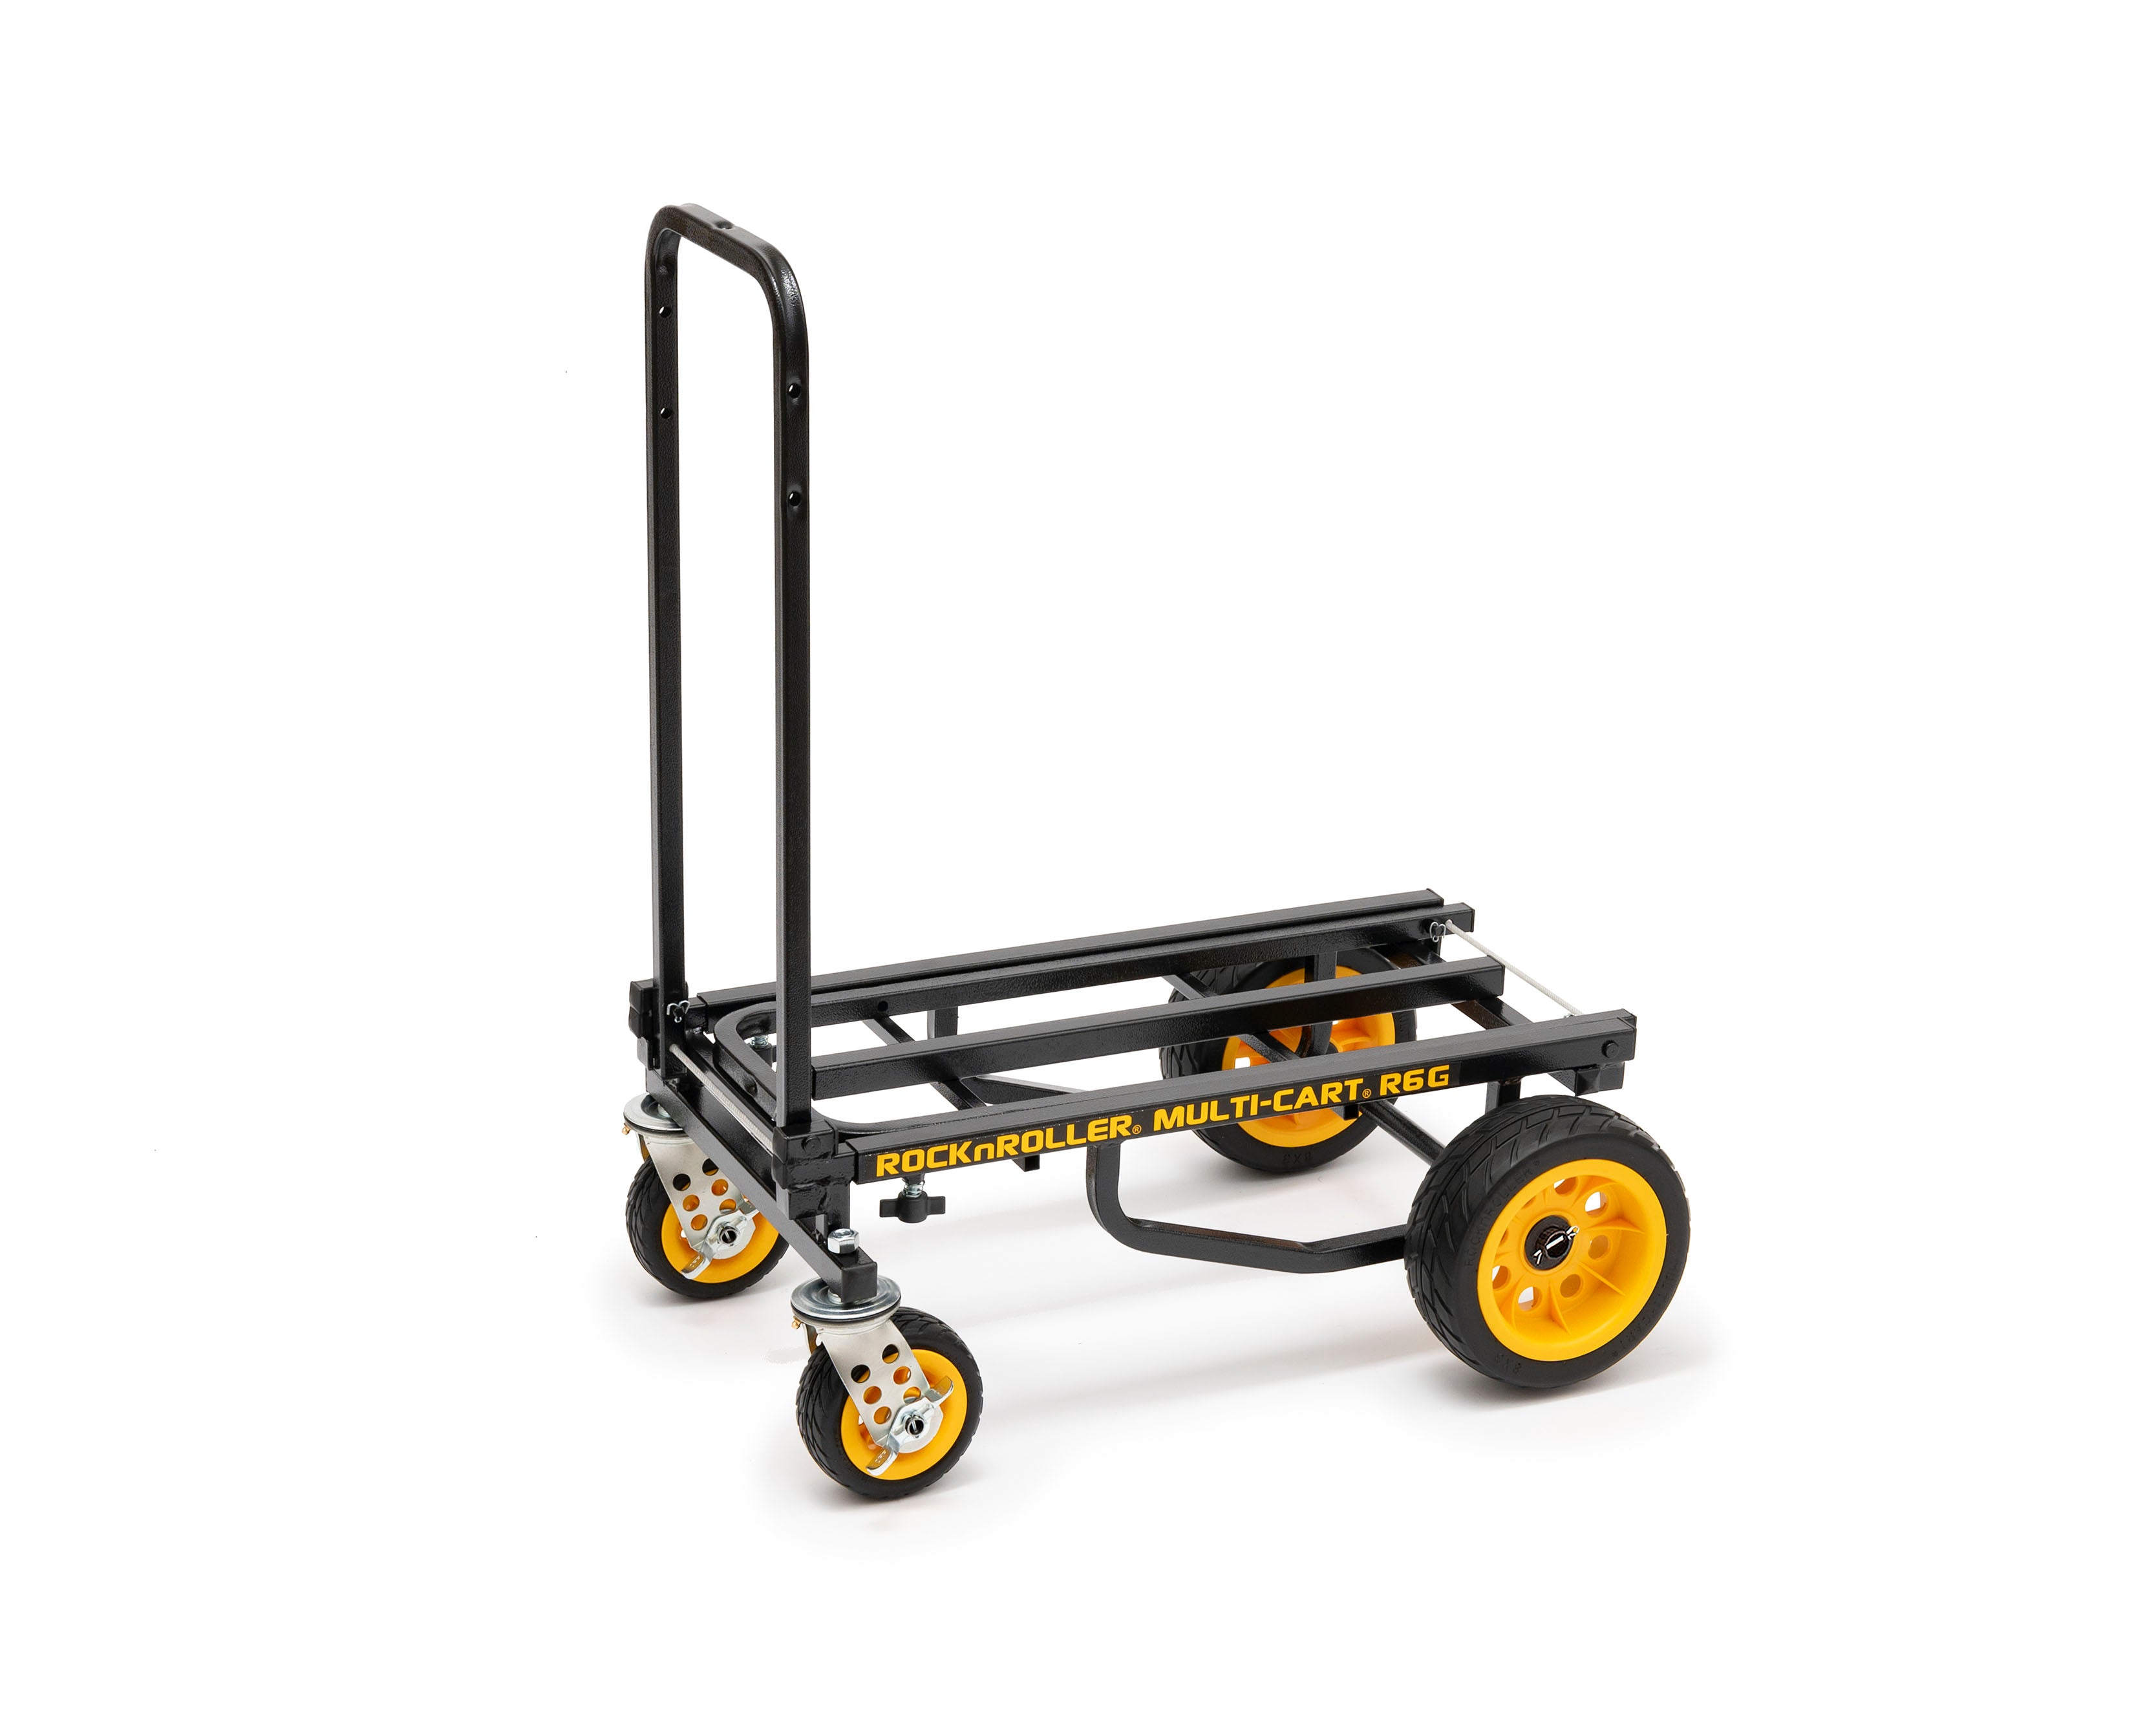 RockNRoller® Multi-Cart® R6G "Mini Ground Glider"